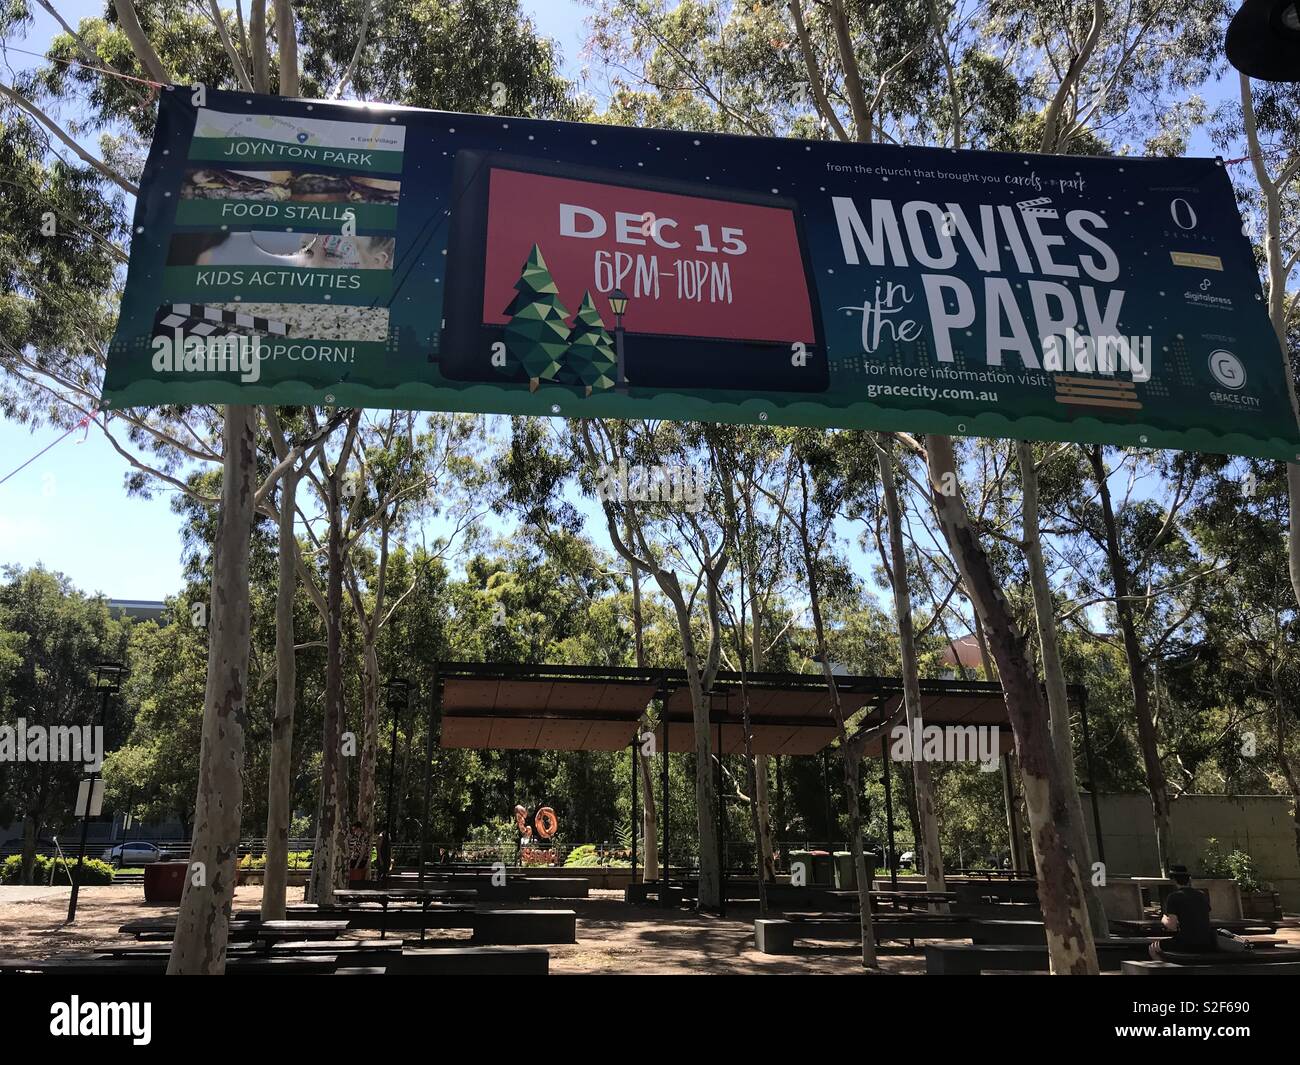 Movies in the Park coming to Joynton Park, Gadigal Avenue, Zetland, Sydney, NSW, Australia Stock Photo